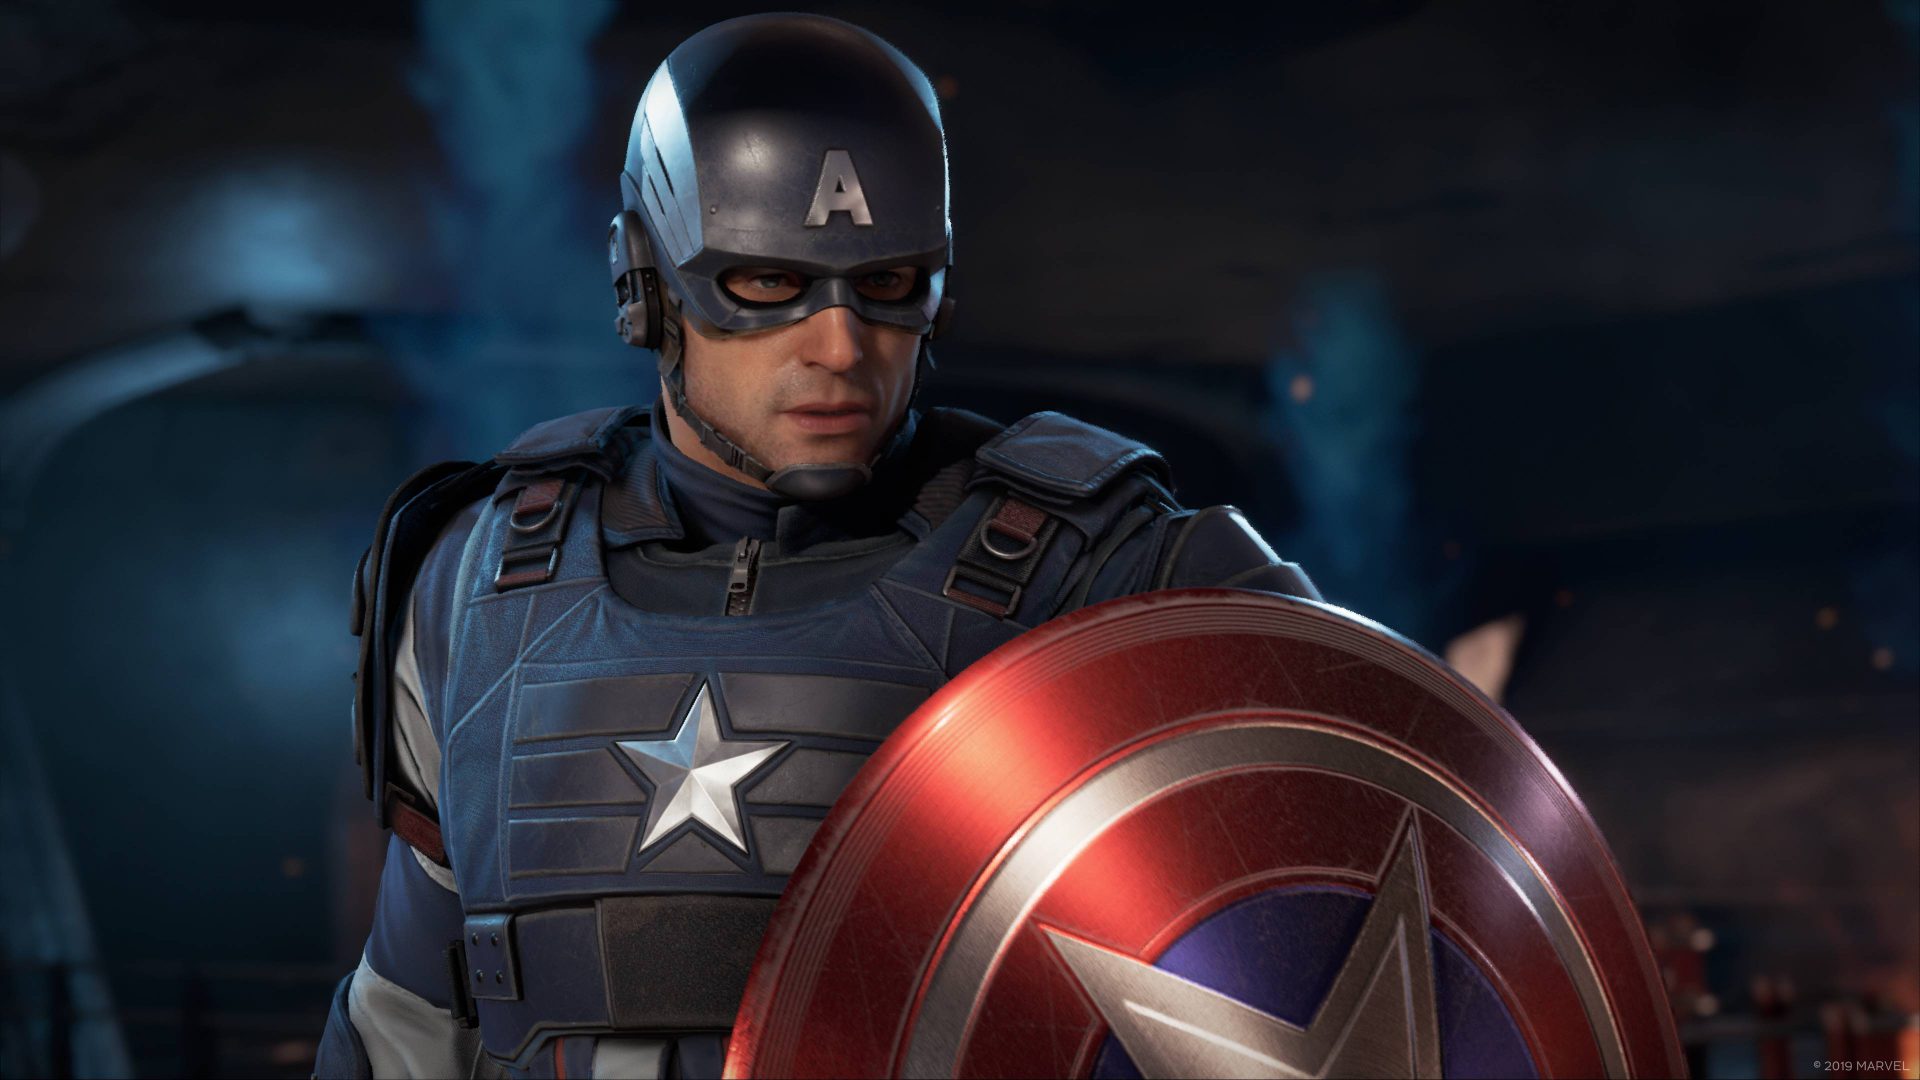 Marvelستتمكن من لعب Avengers في Madrid Games Week